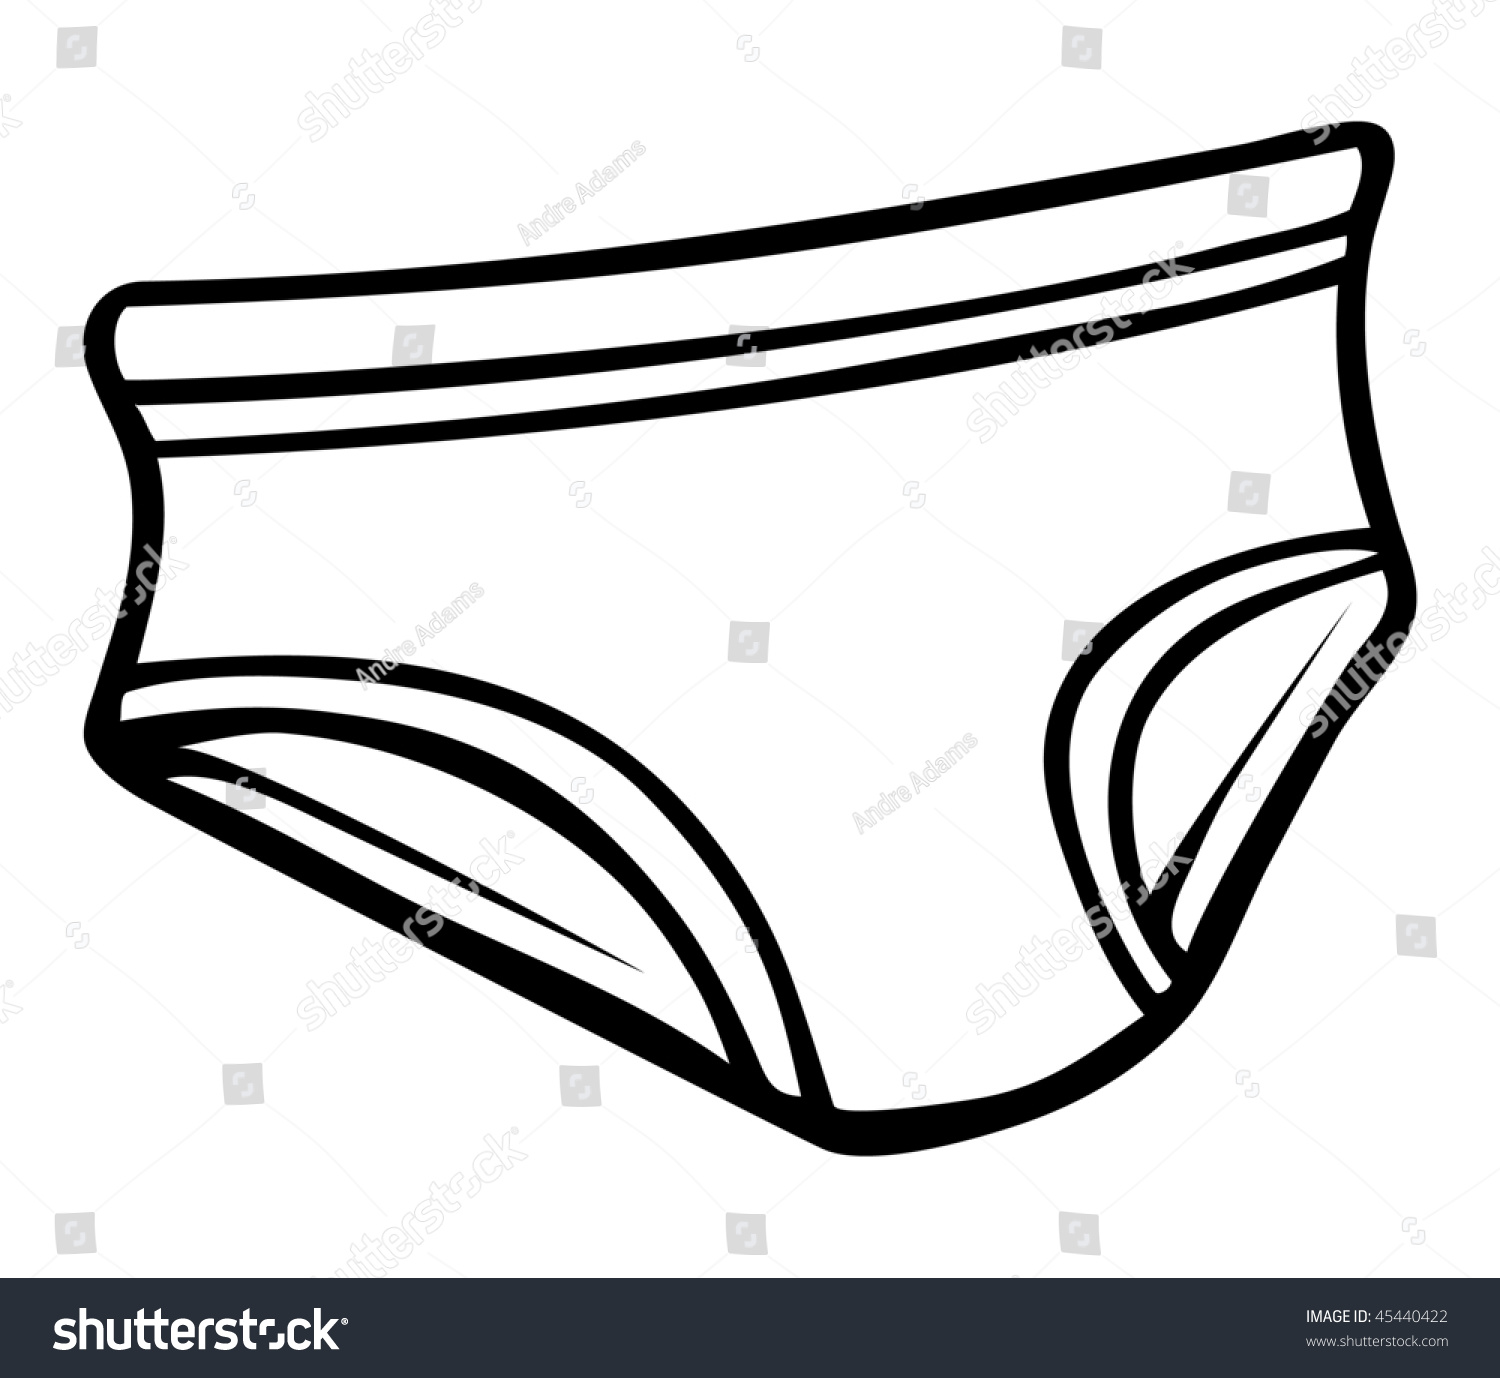 underwear clipart black and white - photo #9